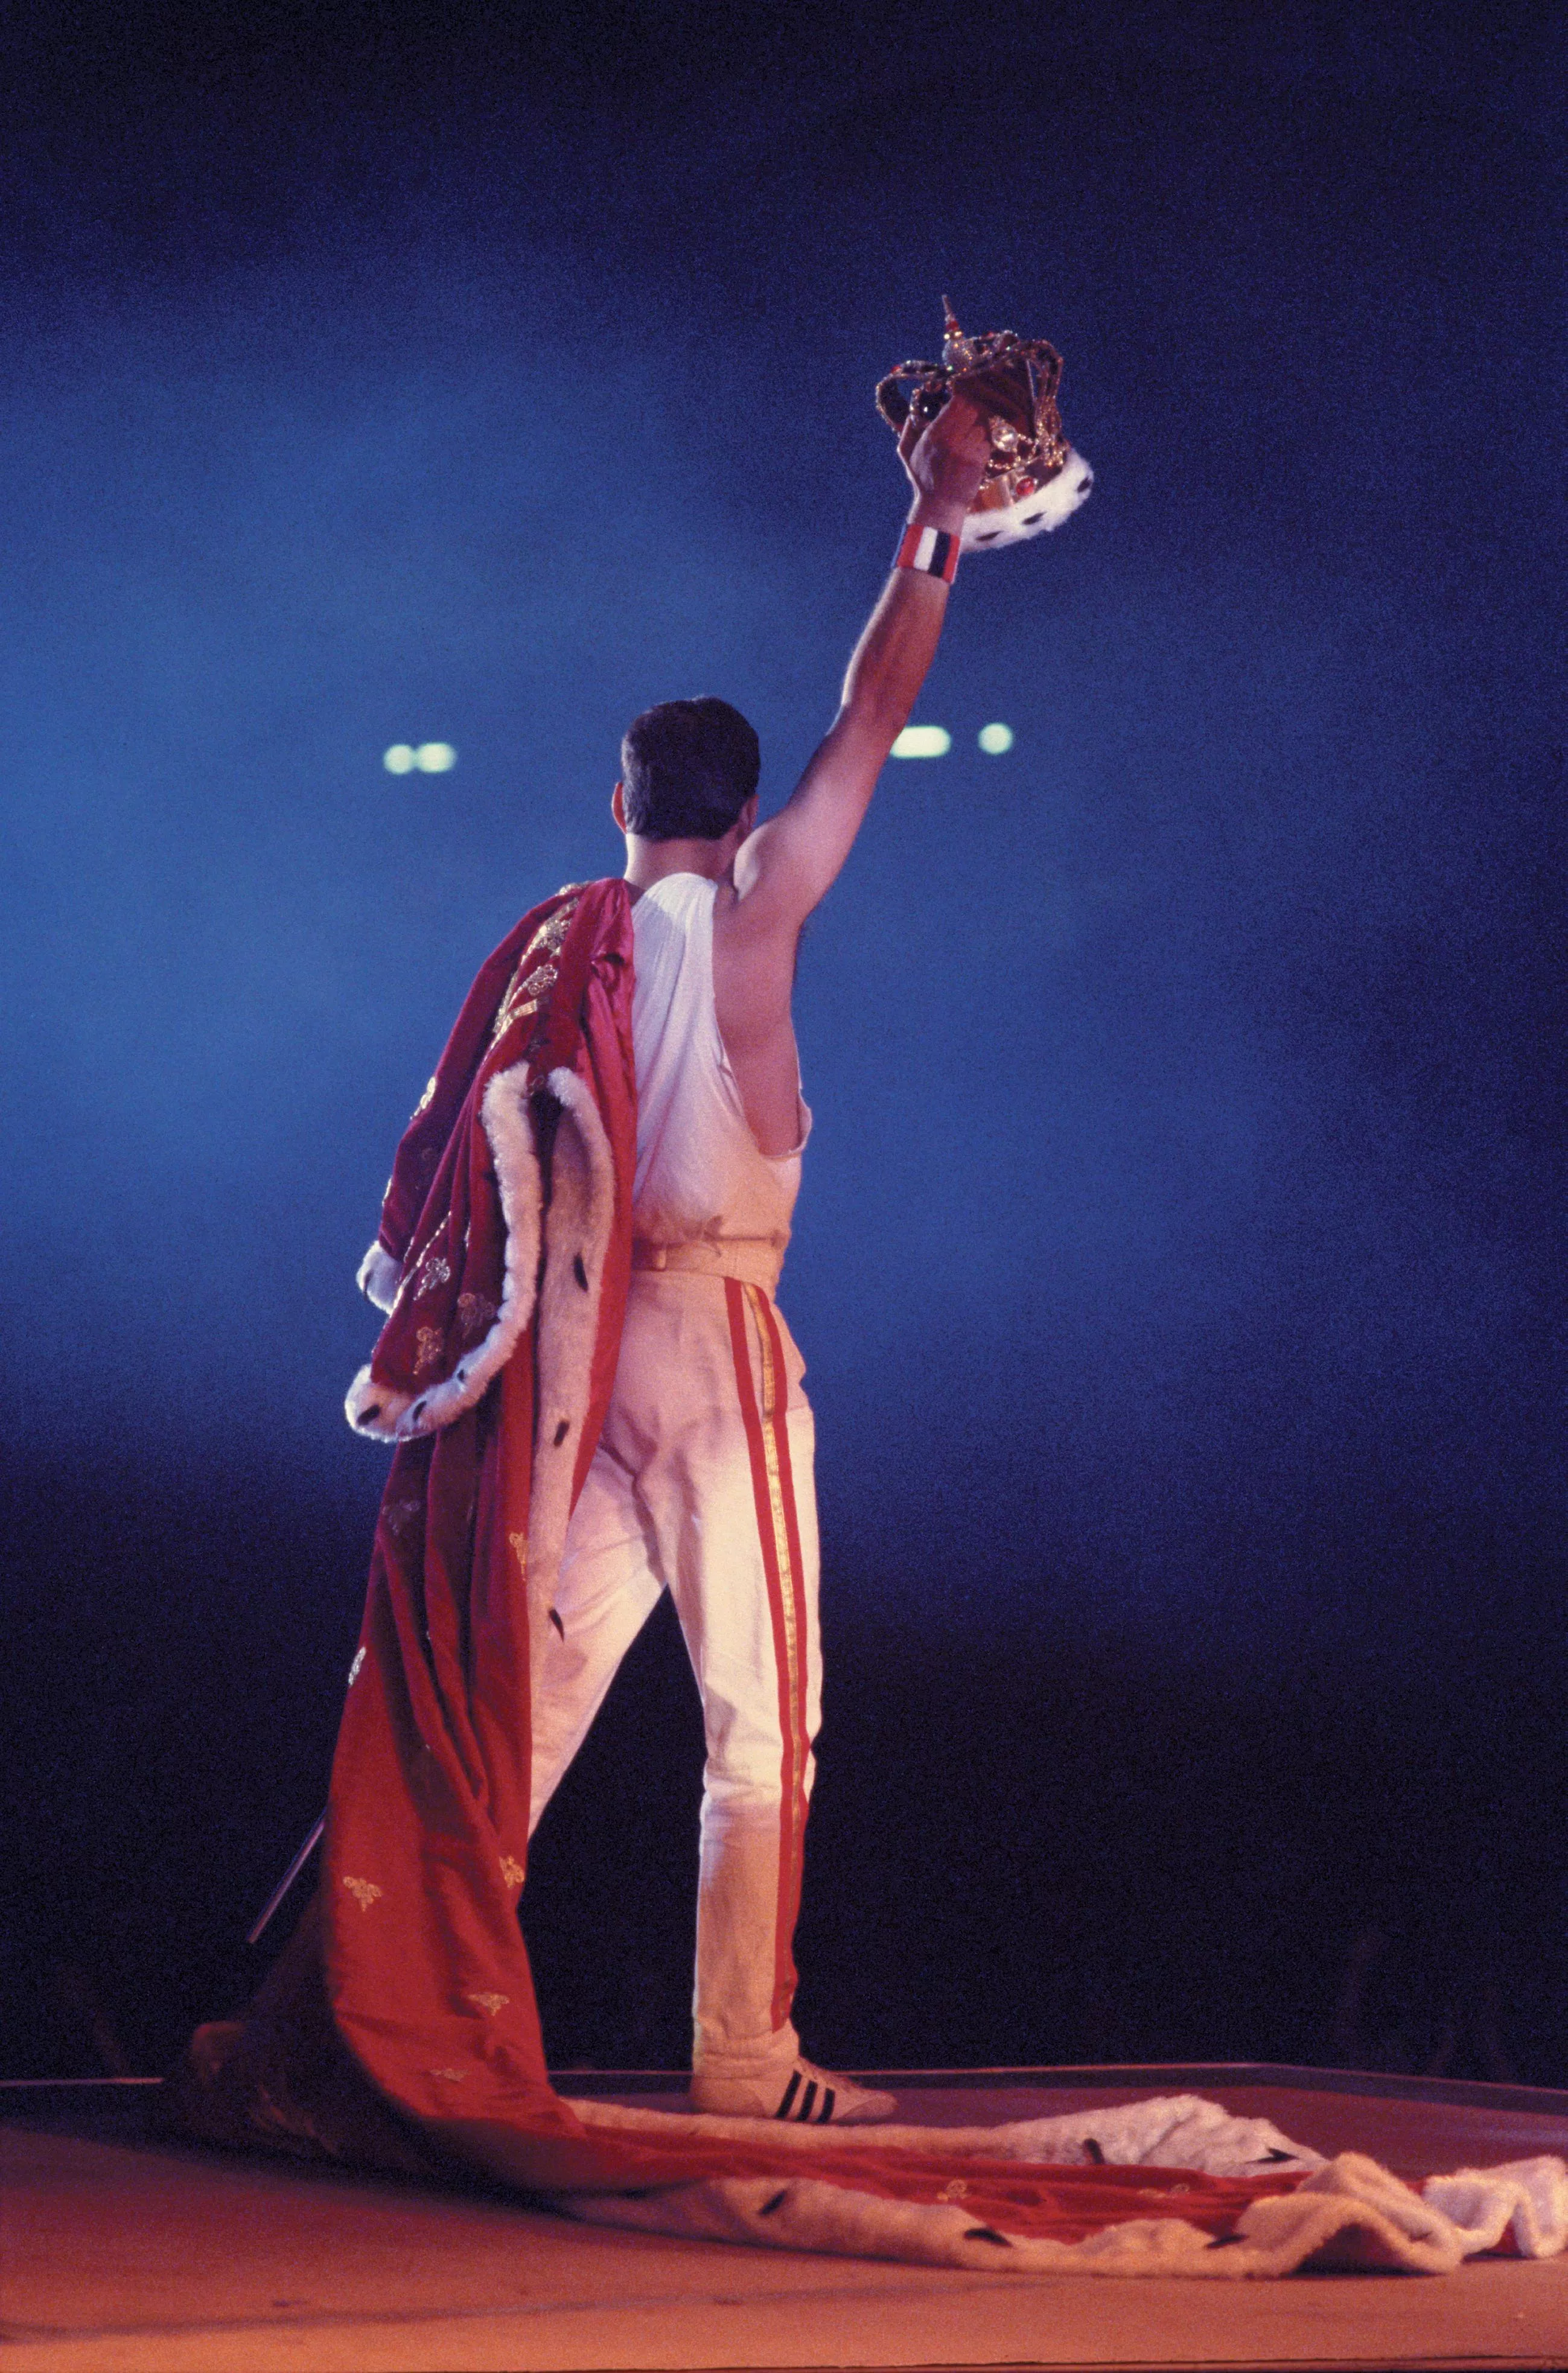 Ny single: Freddie Mercury synger igen 